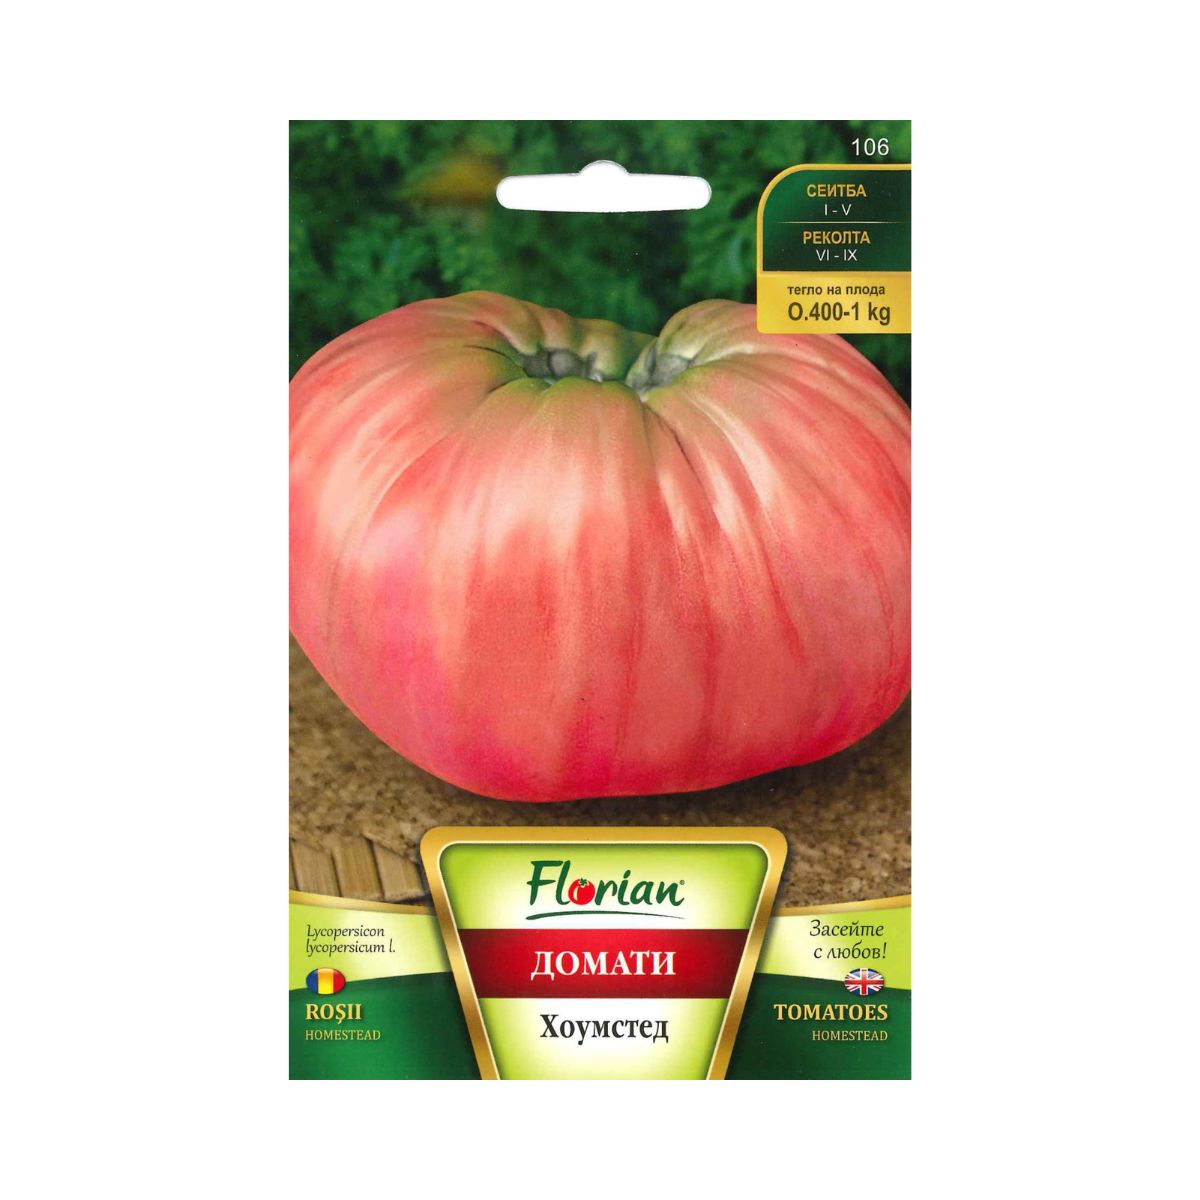 Tomate - Seminte de tomate Taranesti (Homestead) 0,3 grame FLORIAN, hectarul.ro